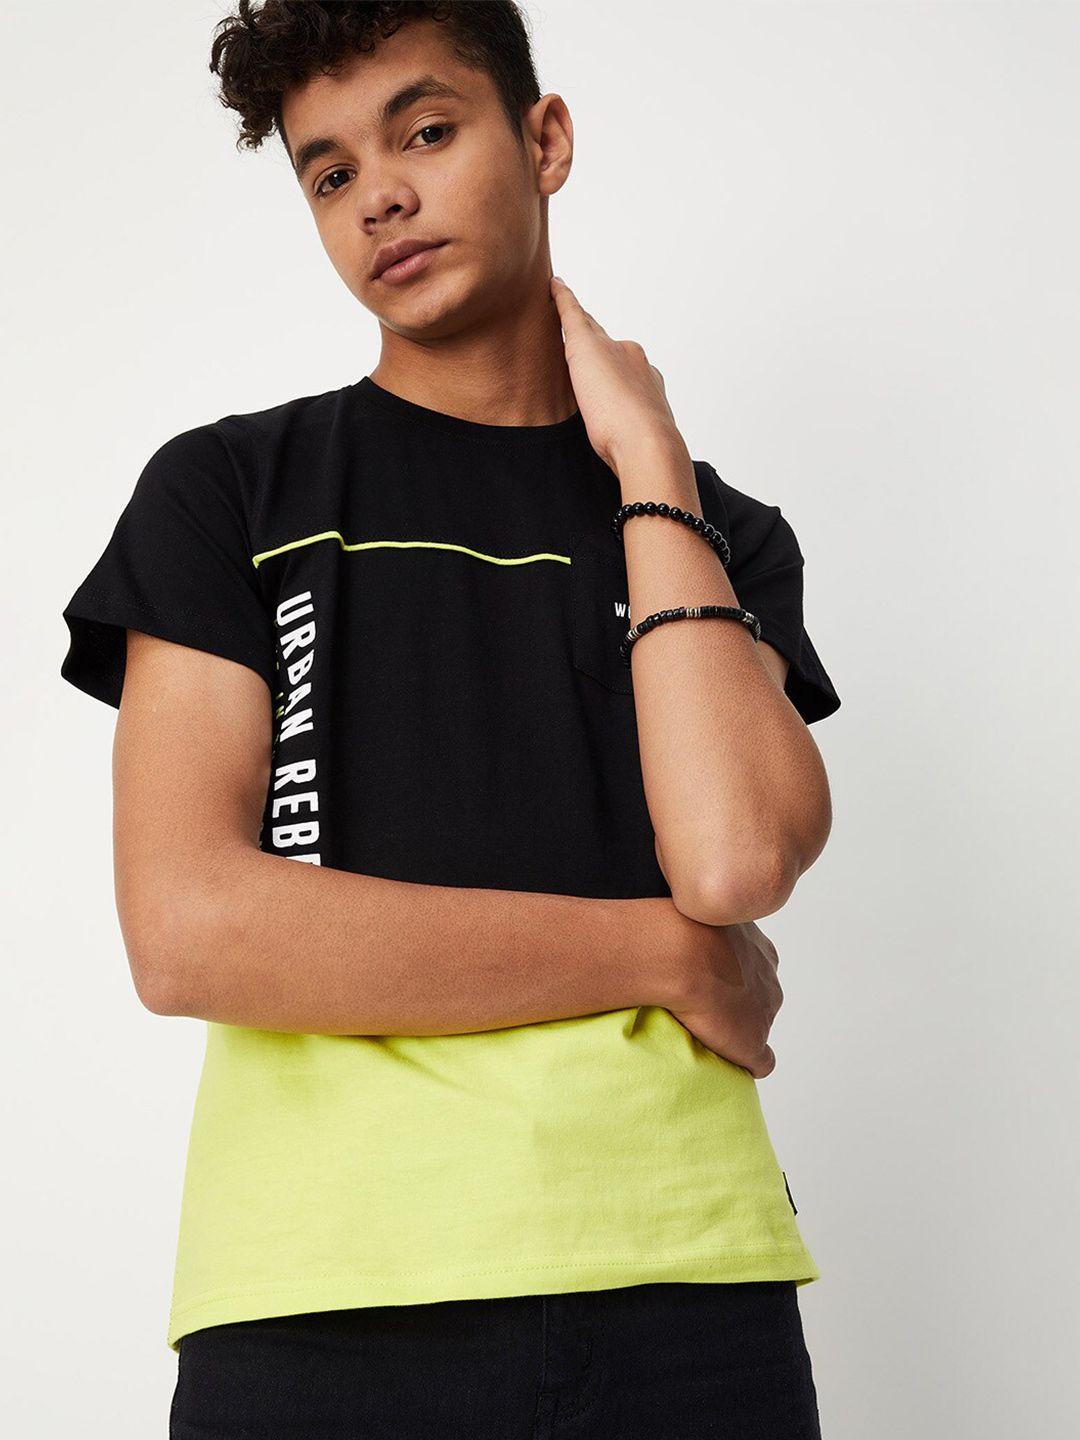 max boys black & yellow colourblocked cotton t-shirt